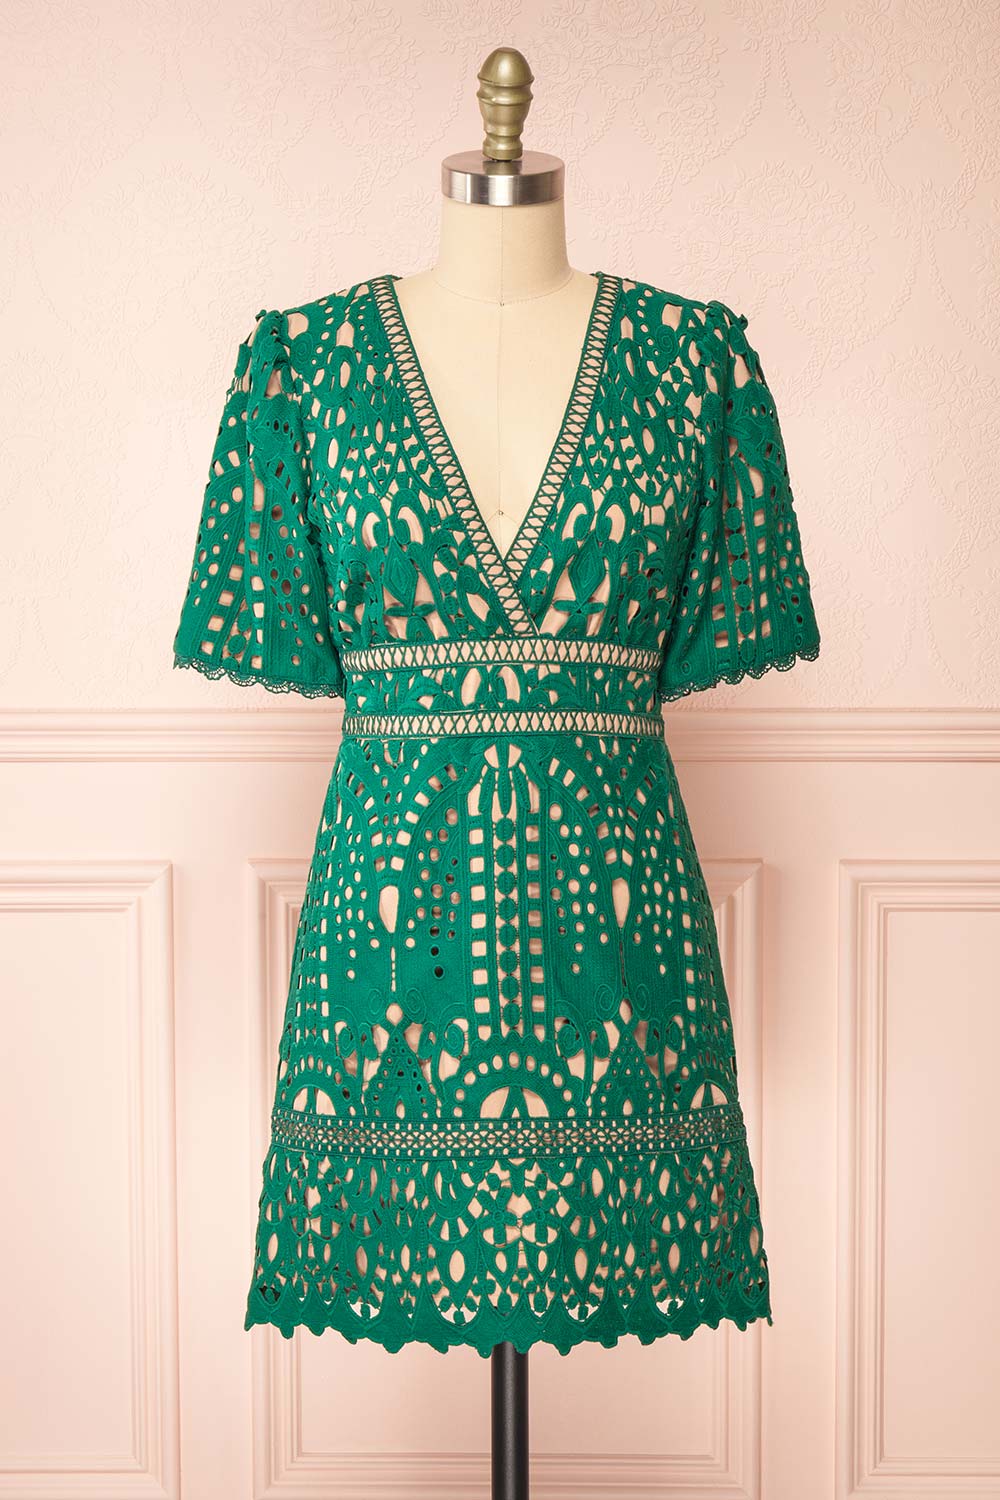 Analla | Short Green Crocheted Lace Dress